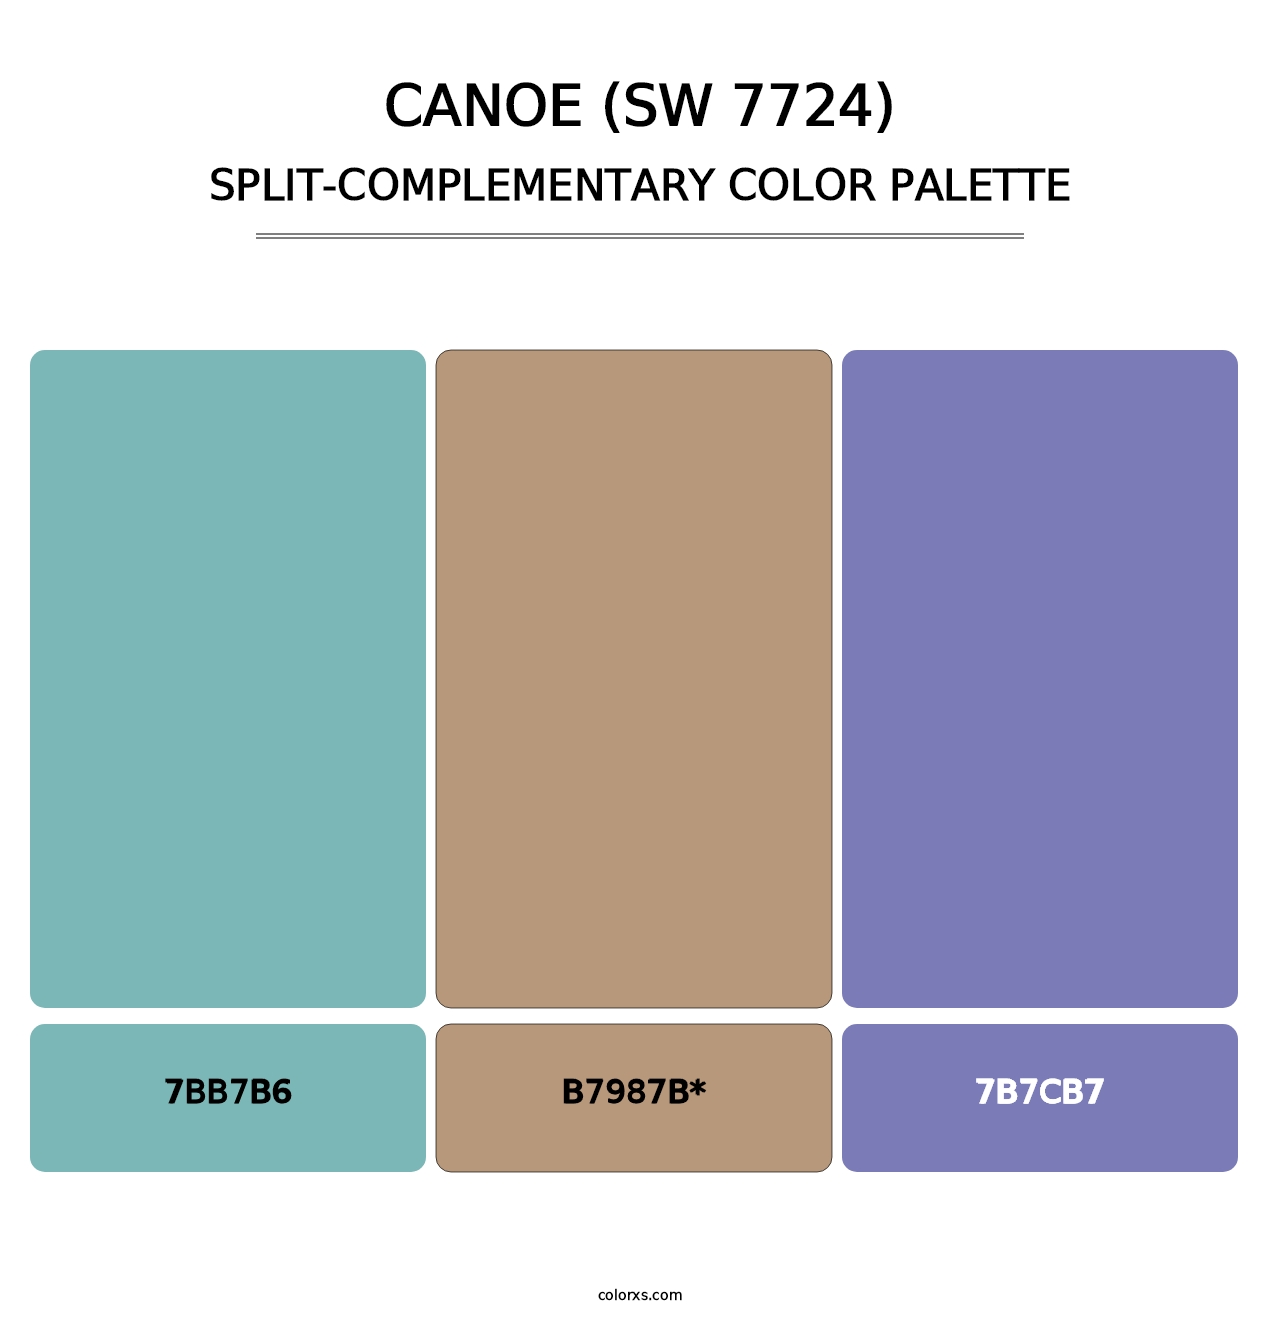 Canoe (SW 7724) - Split-Complementary Color Palette